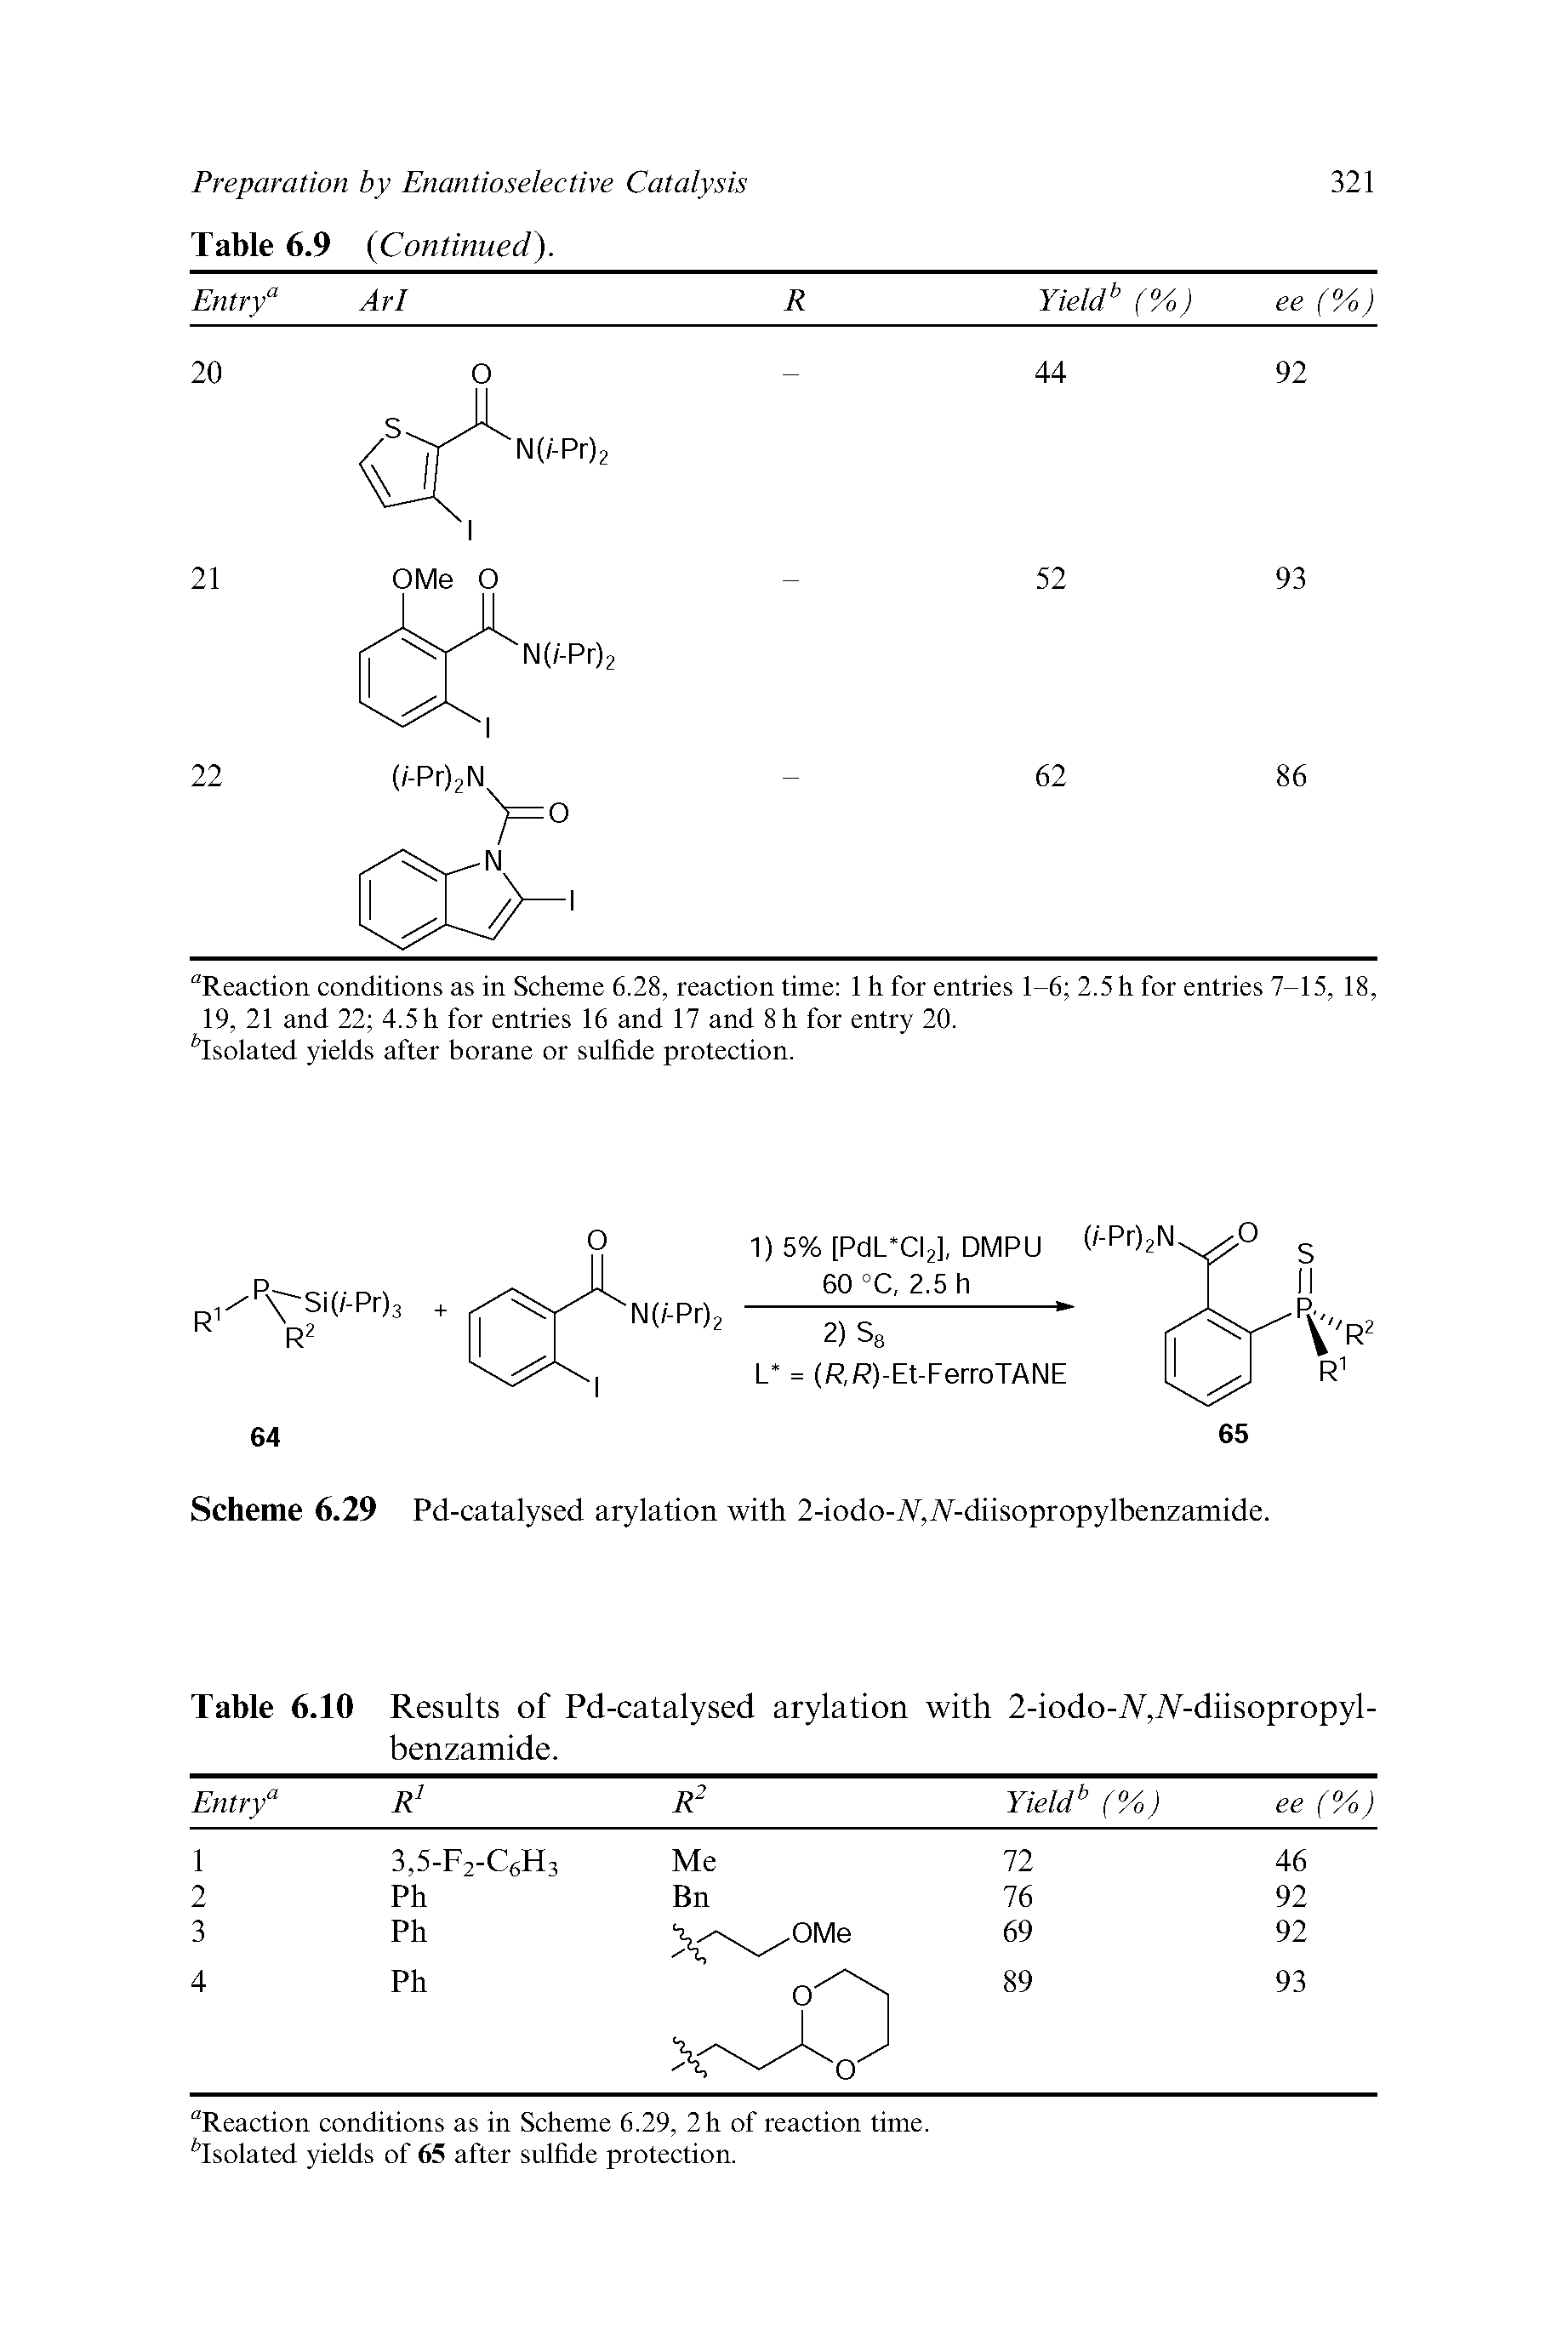 Scheme 6.29 Pd-catalysed arylation with 2-iodo-Af,Af-diisopropylbenzamide.